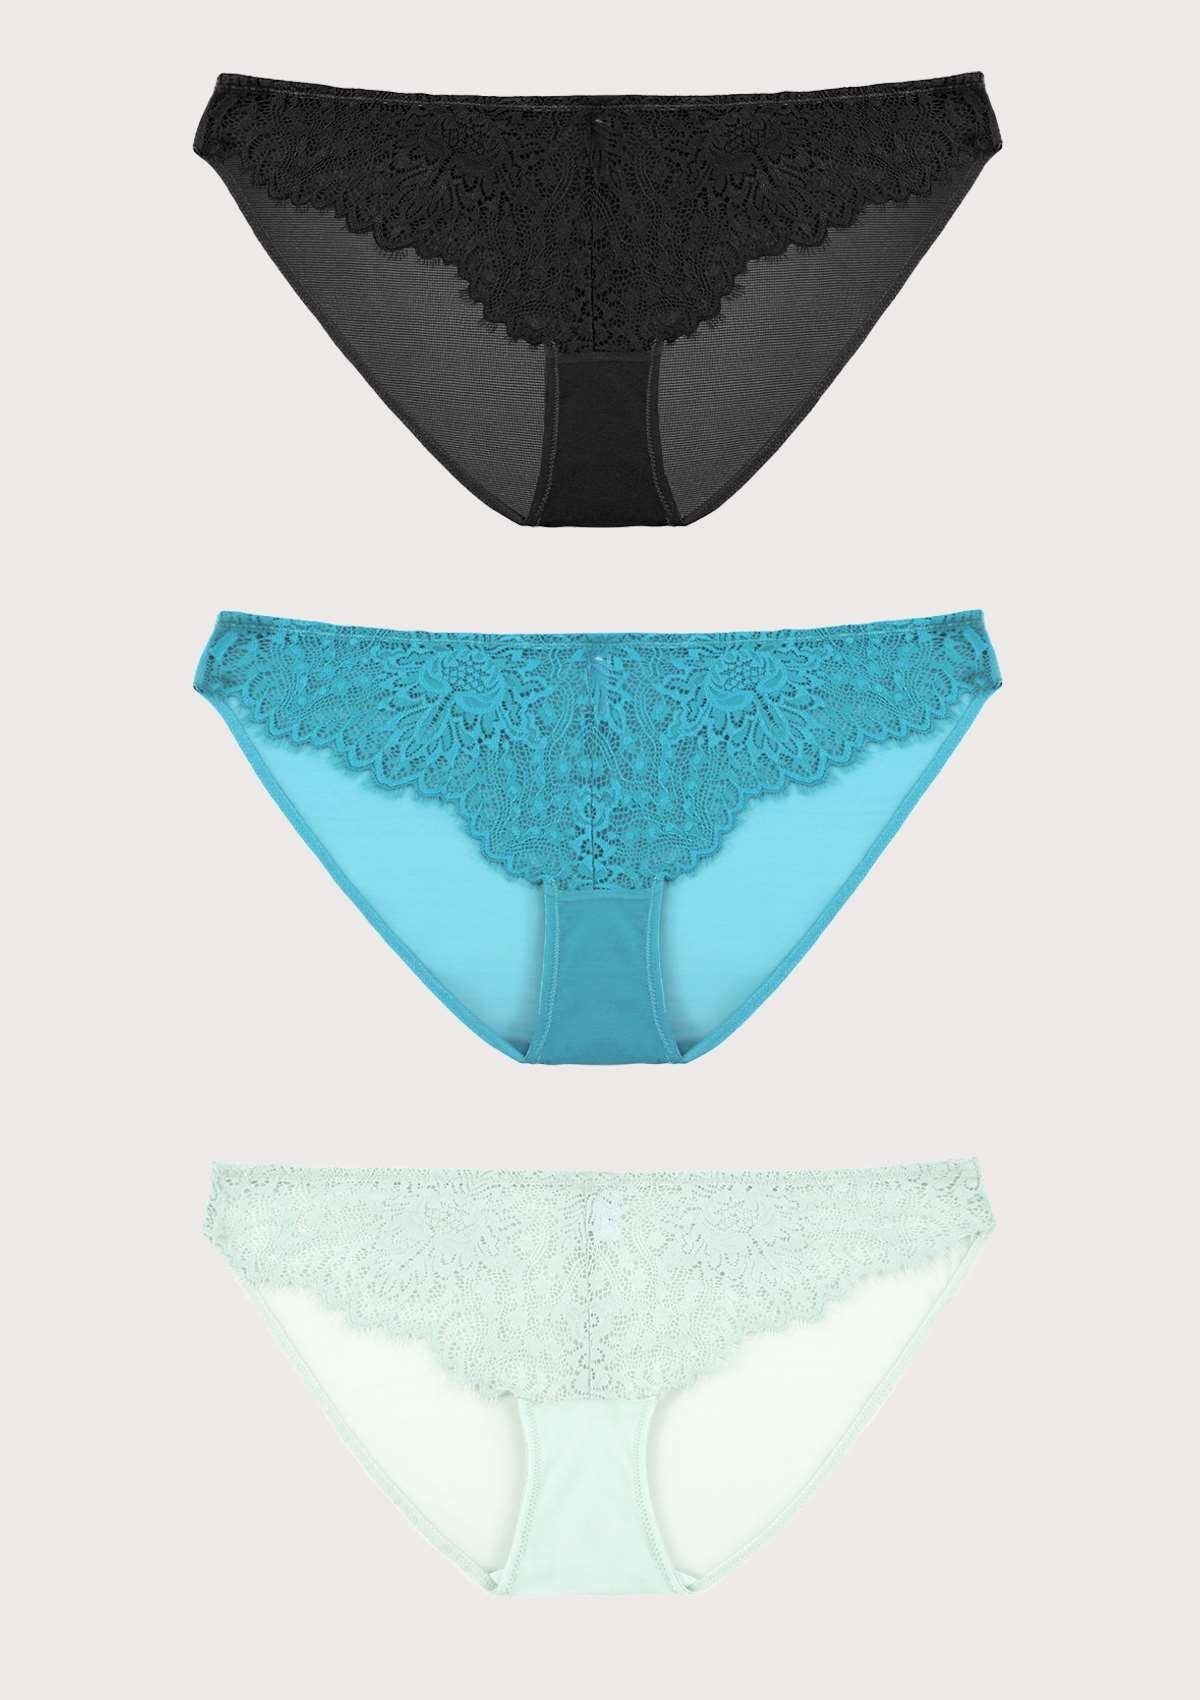 HSIA Sunflower Exquisite Lighweight Soft Lace Bikini Panties 3 Pack - S / Black+Horizon Blue+Pink